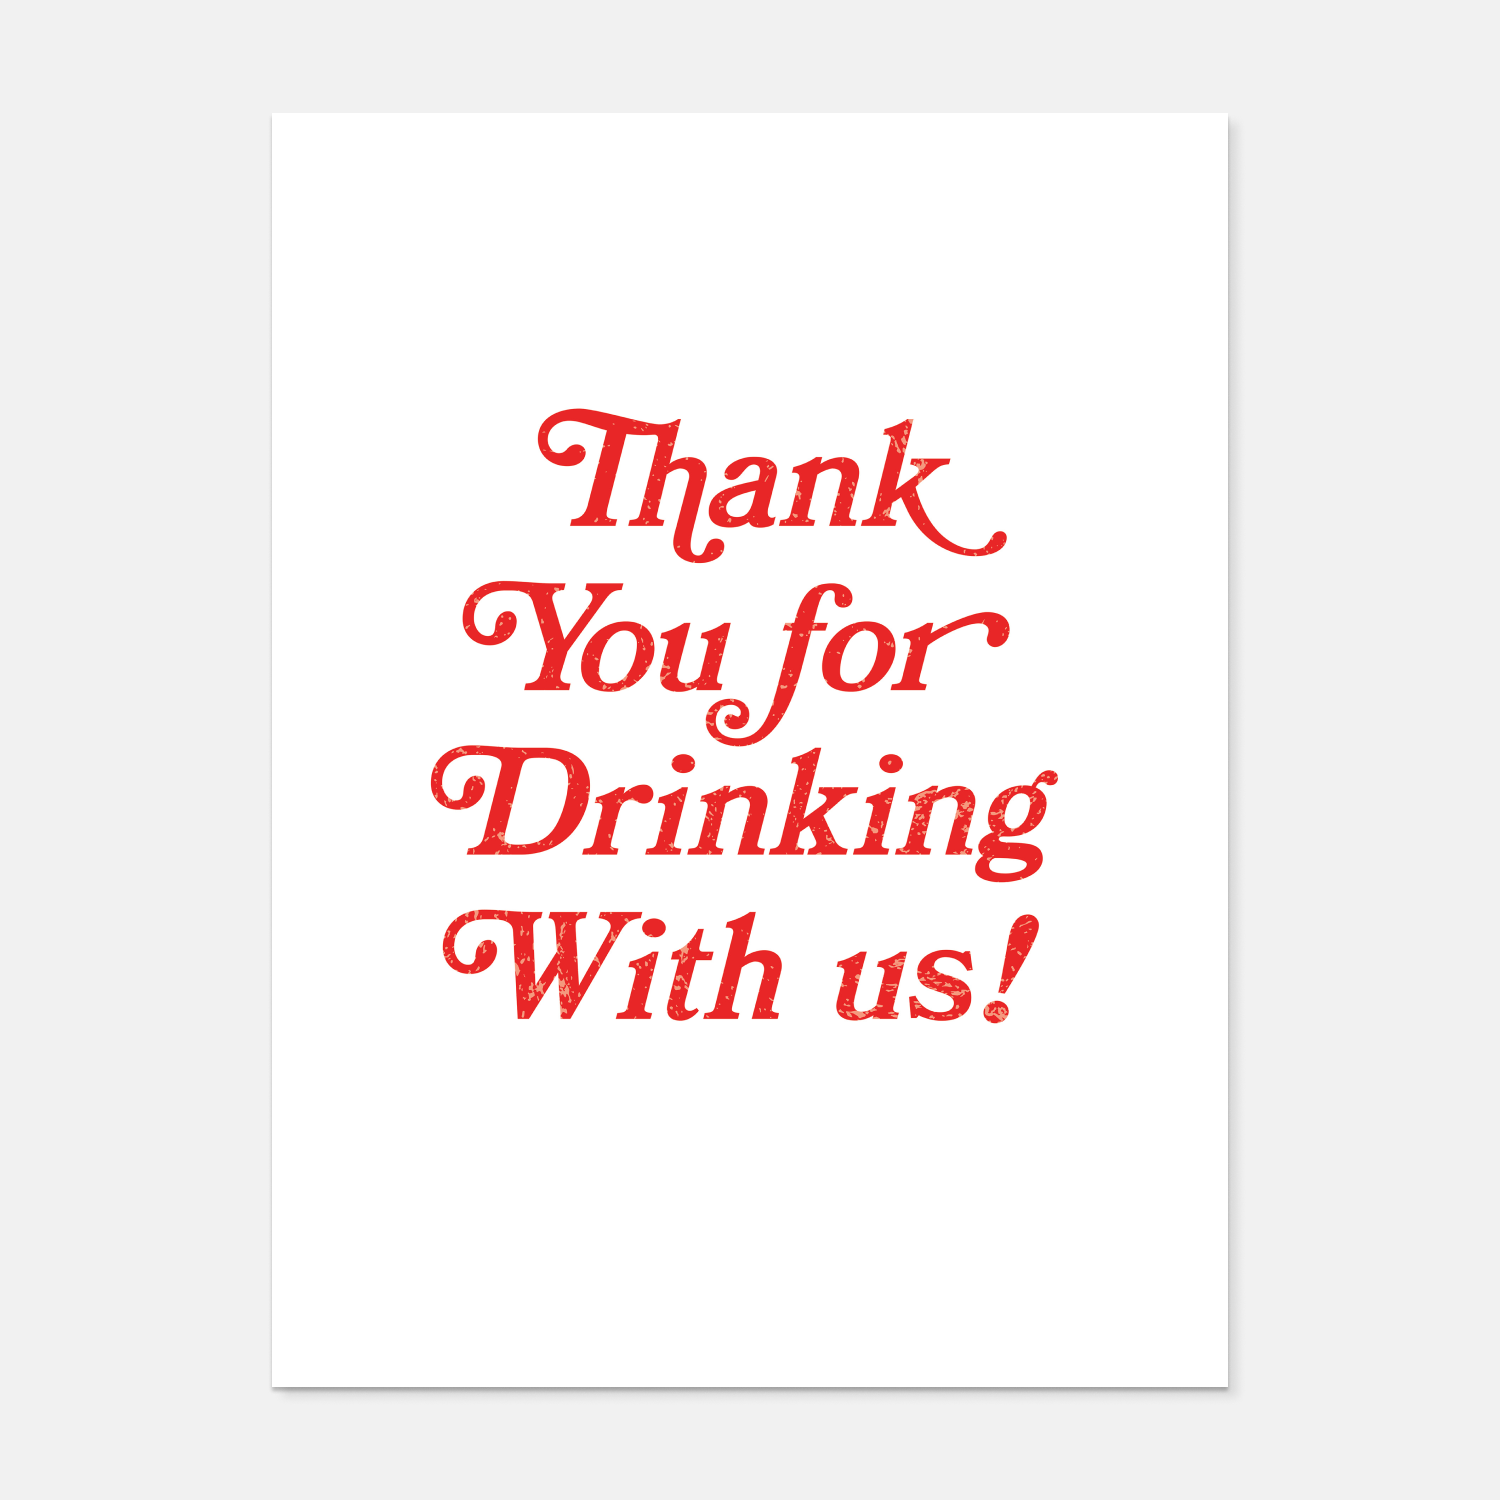 Thanks for the package @drinkcirkul 💦✨ #cirkulinfluencer #drinkcirkul